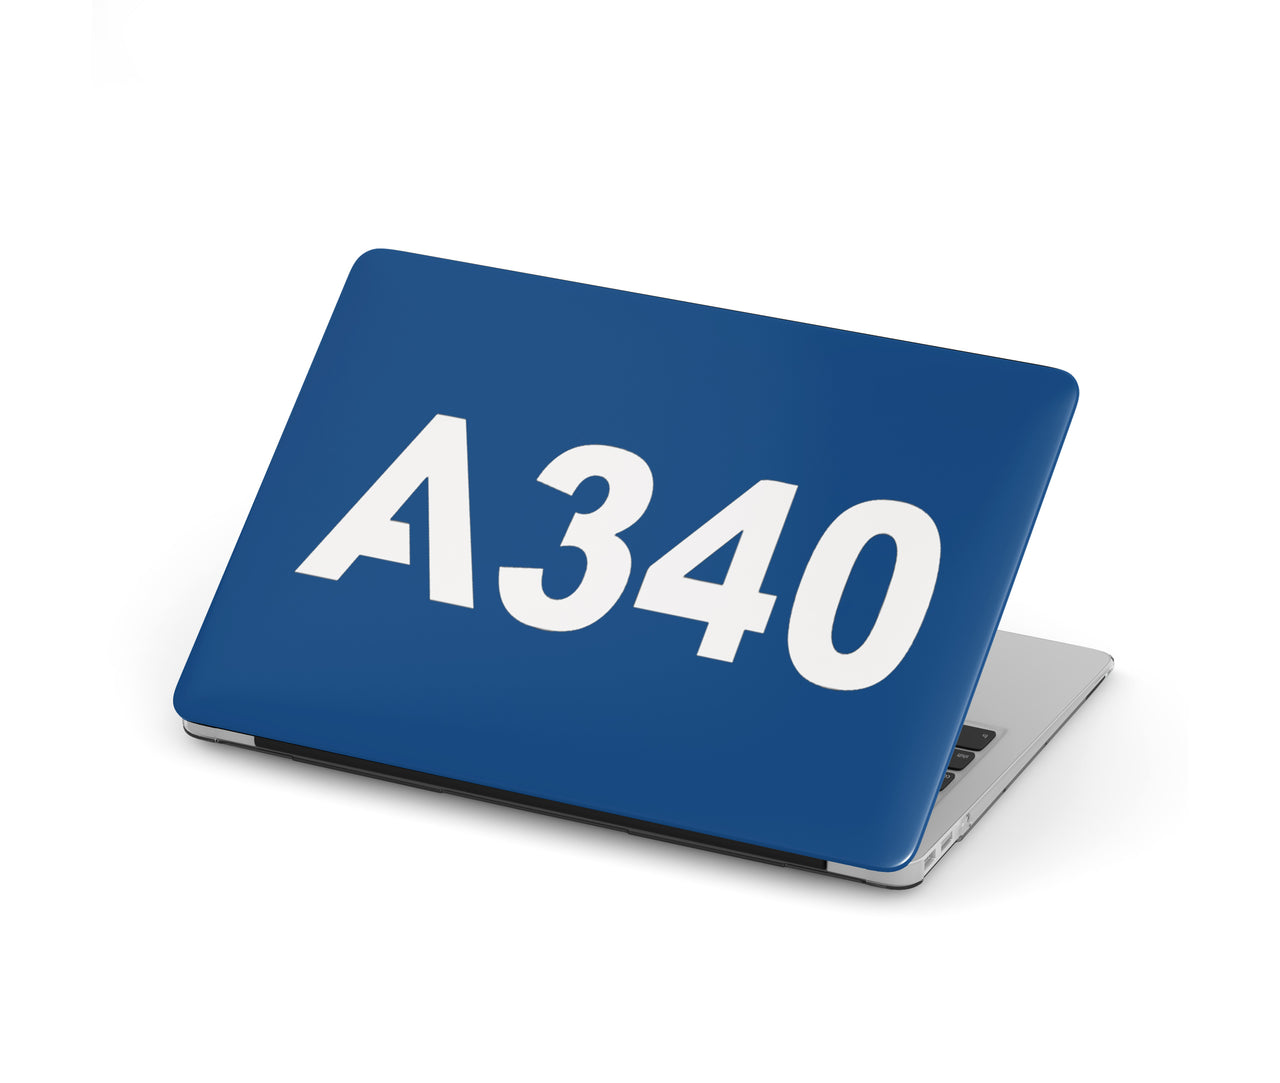 A340 Flat Text Designed Macbook Cases